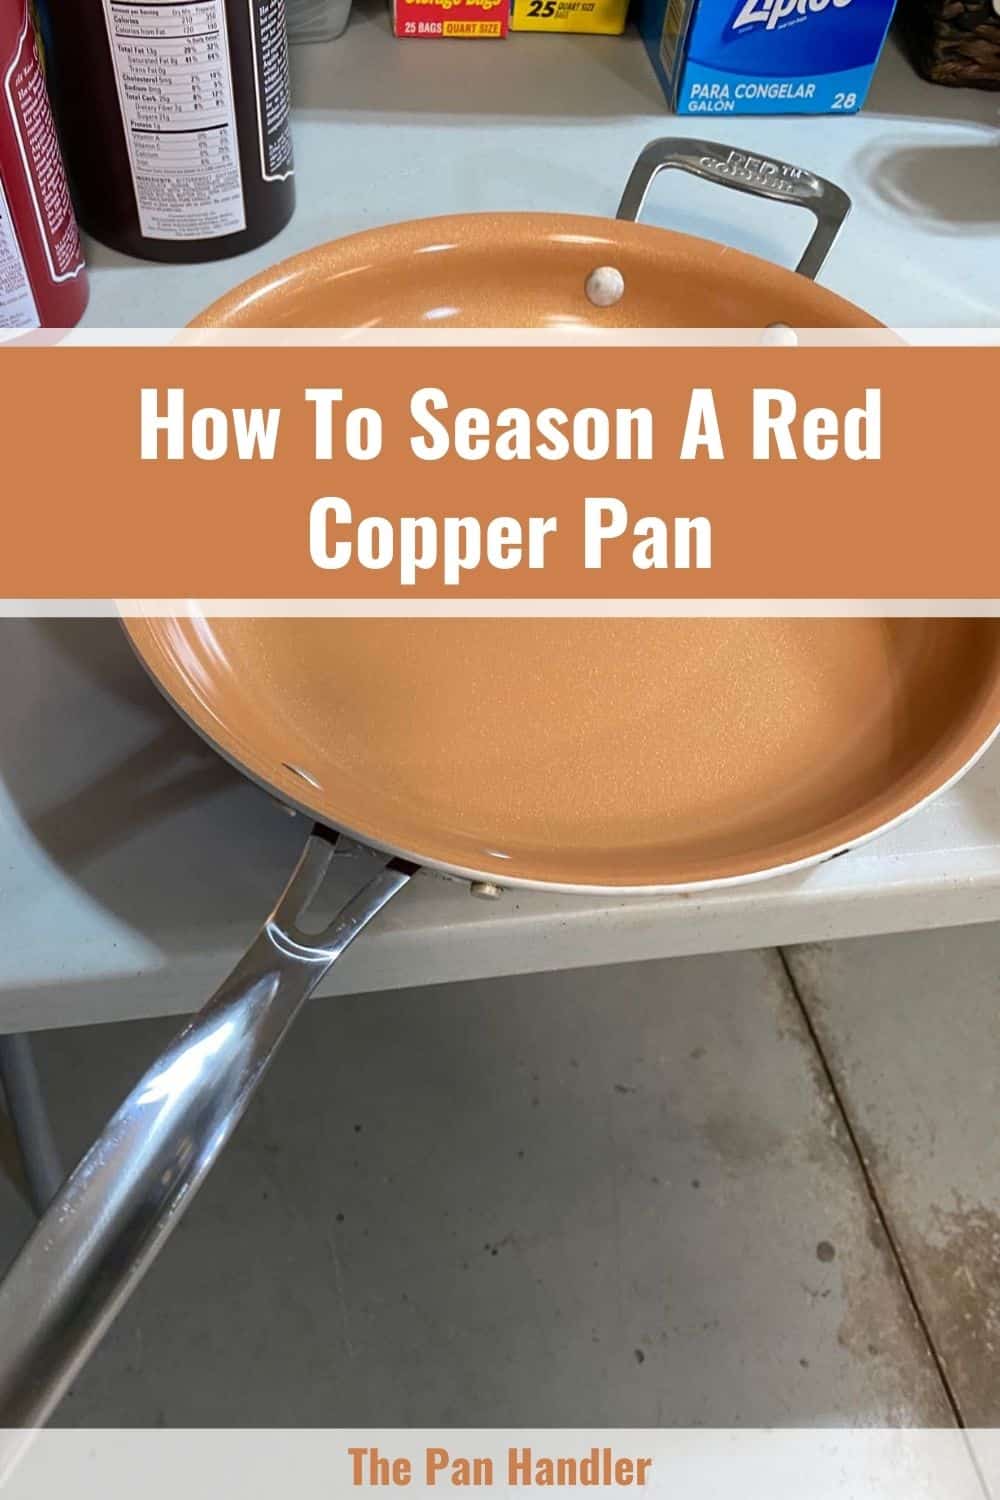 https://thepan-handler.com/wp-content/uploads/2021/06/seasoning-copper-pan.jpg